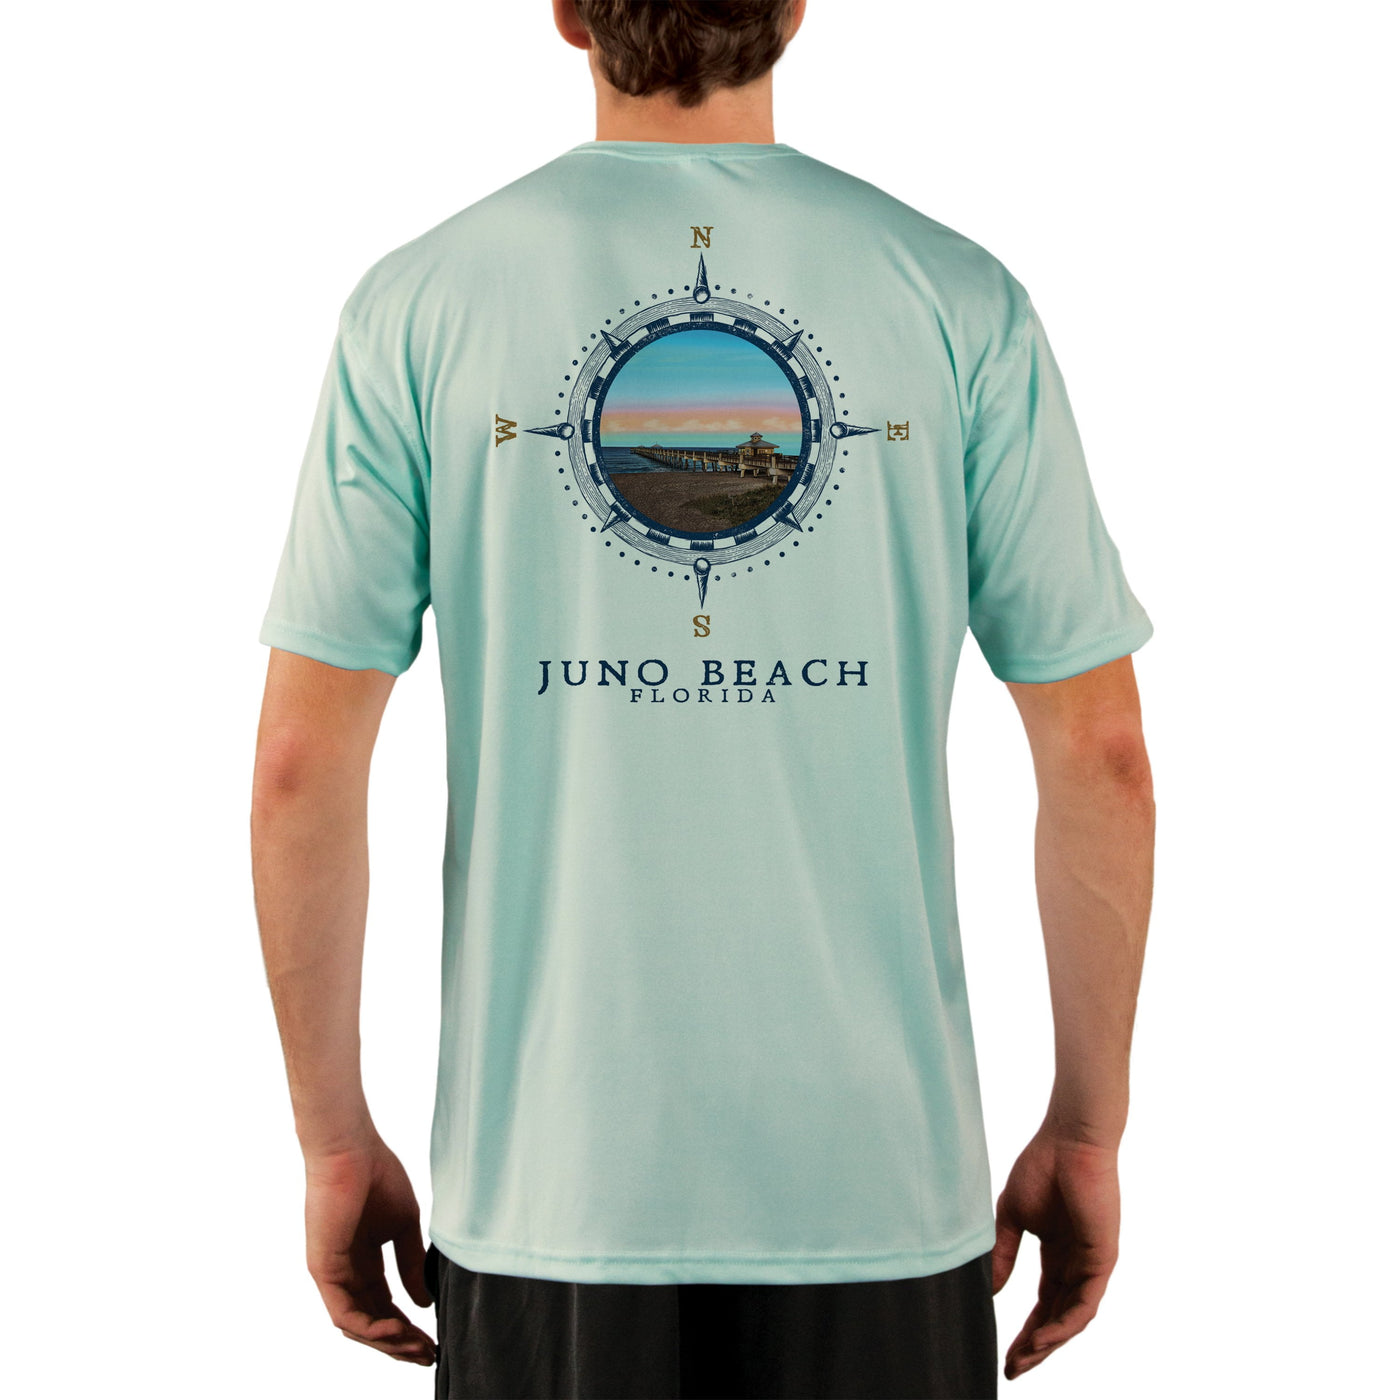 Compass Vintage Juno Beach Men's UPF 50+ Short Sleeve T-shirt